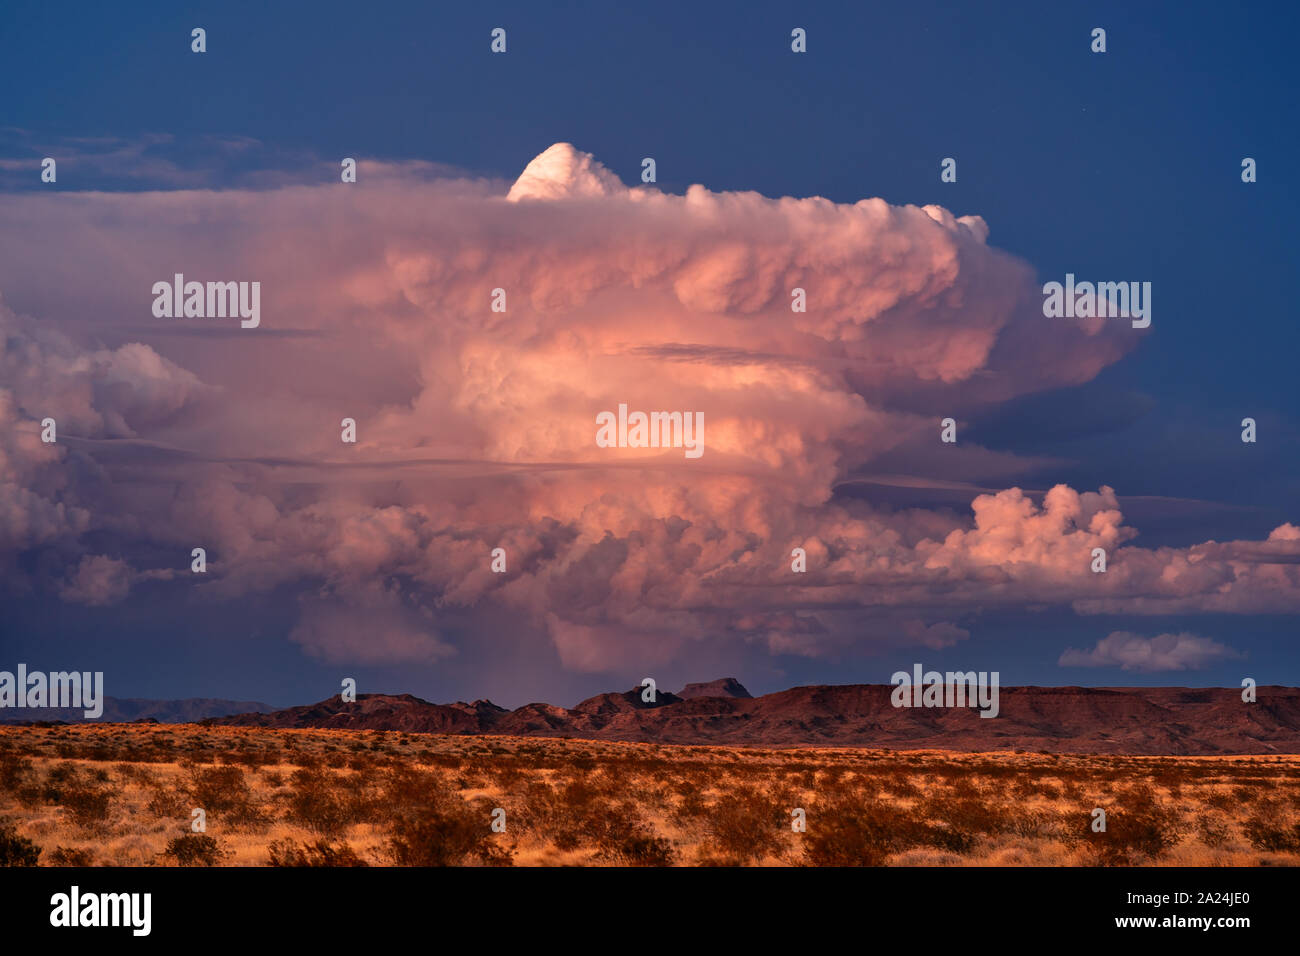 A supercell thunderstorm cumulonimbus cloud catches colorful, sunset light in the desert near Lake Havasu City, Arizona Stock Photo